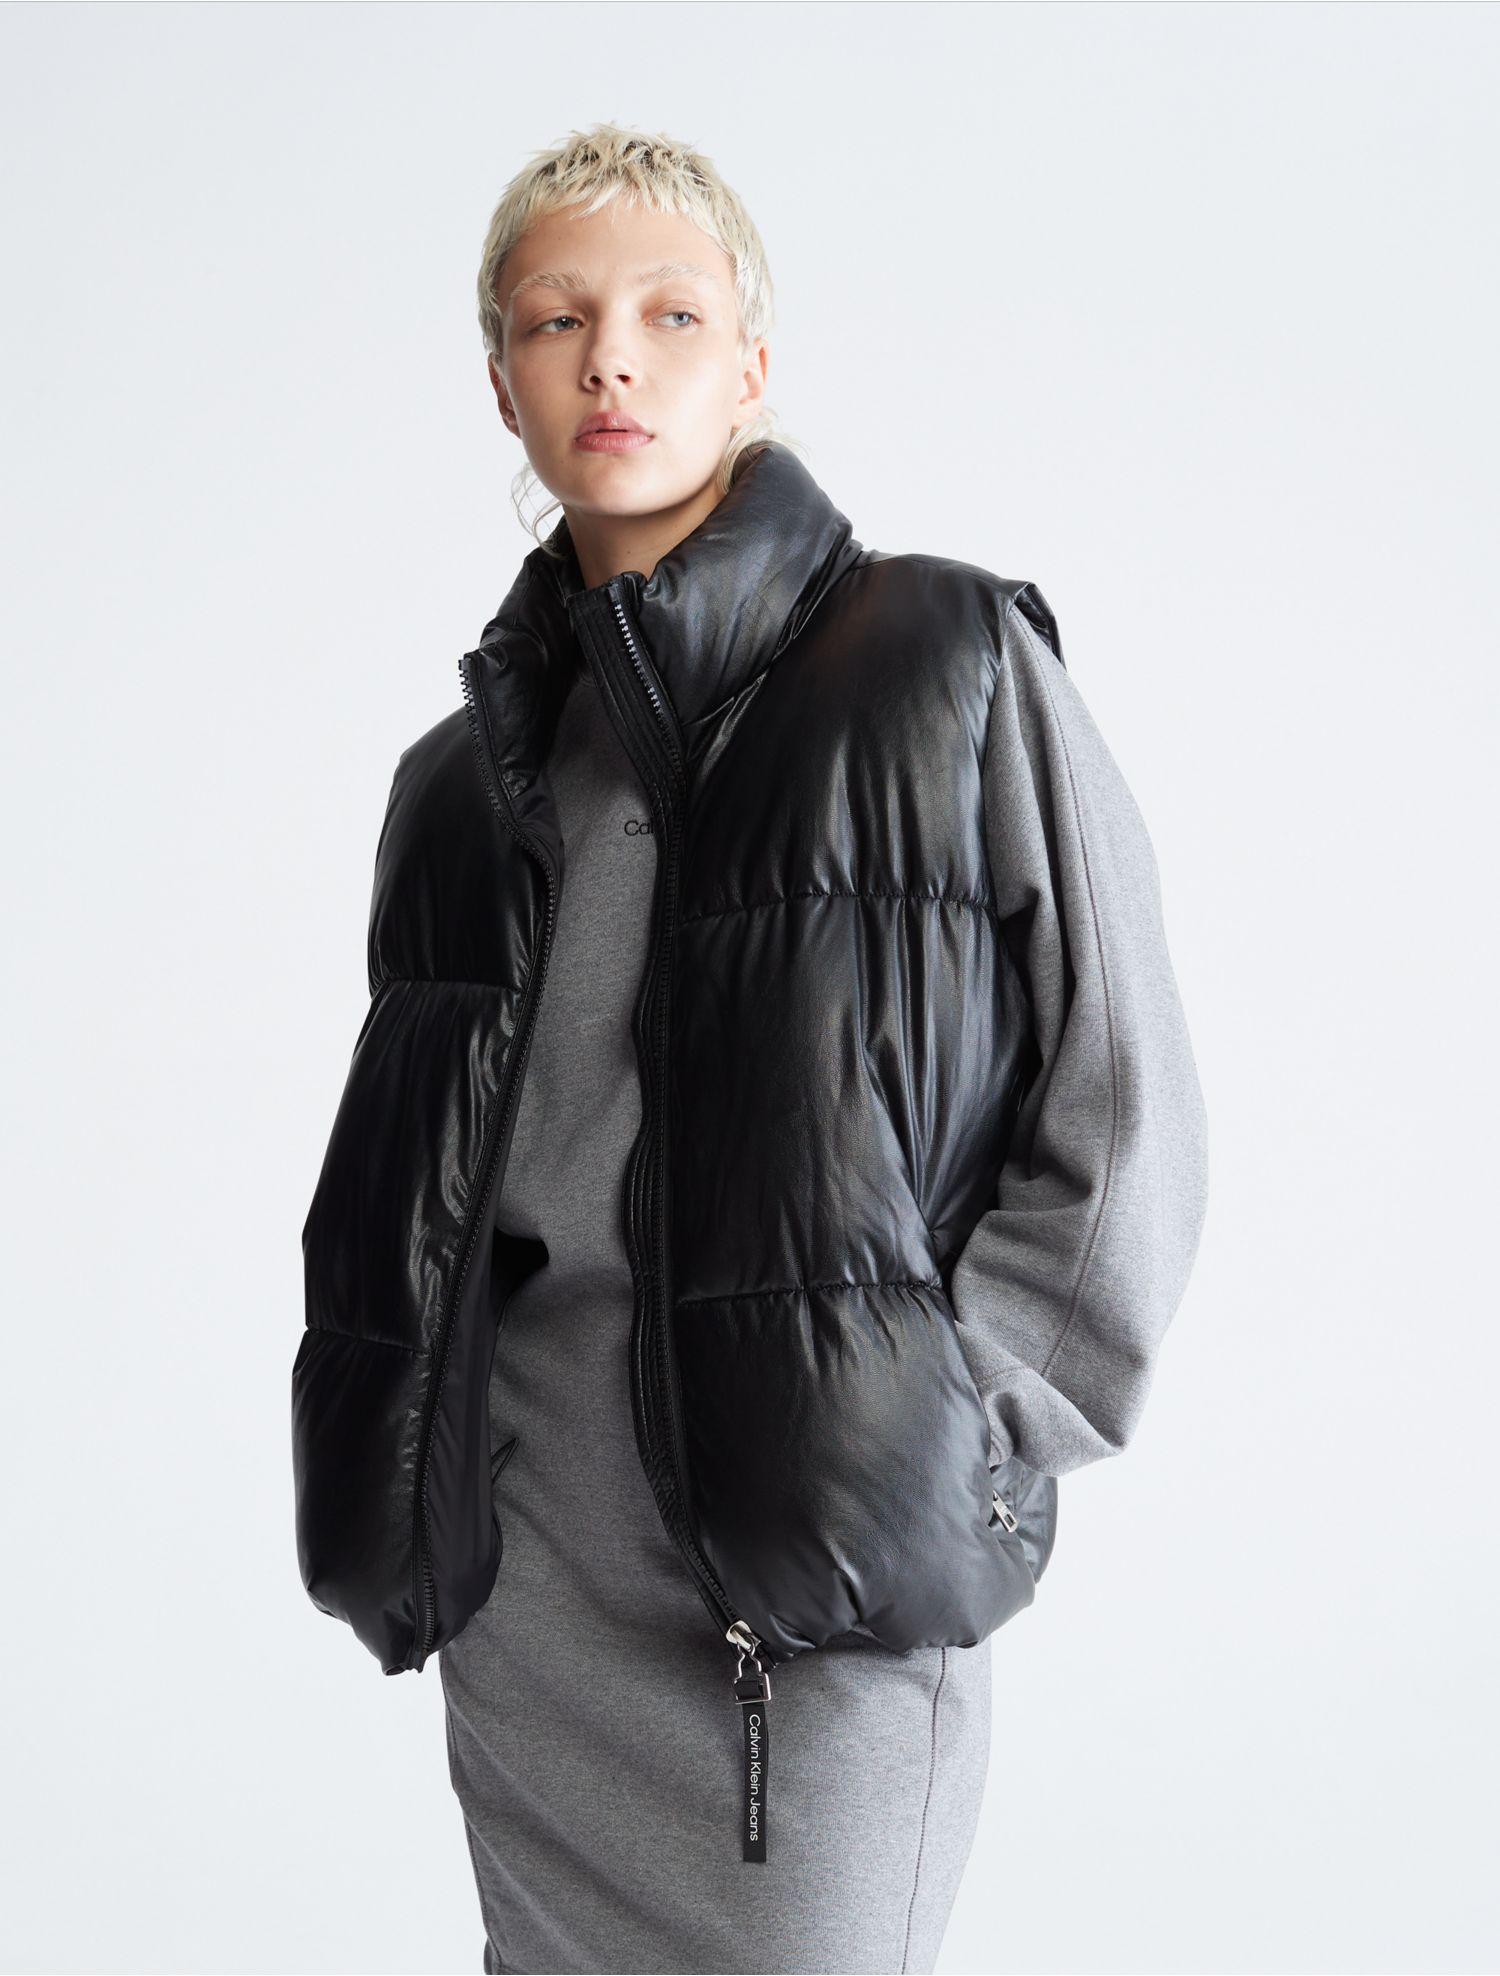 Calvin Klein Women's Faux Leather Puffer Jacket - Black - S